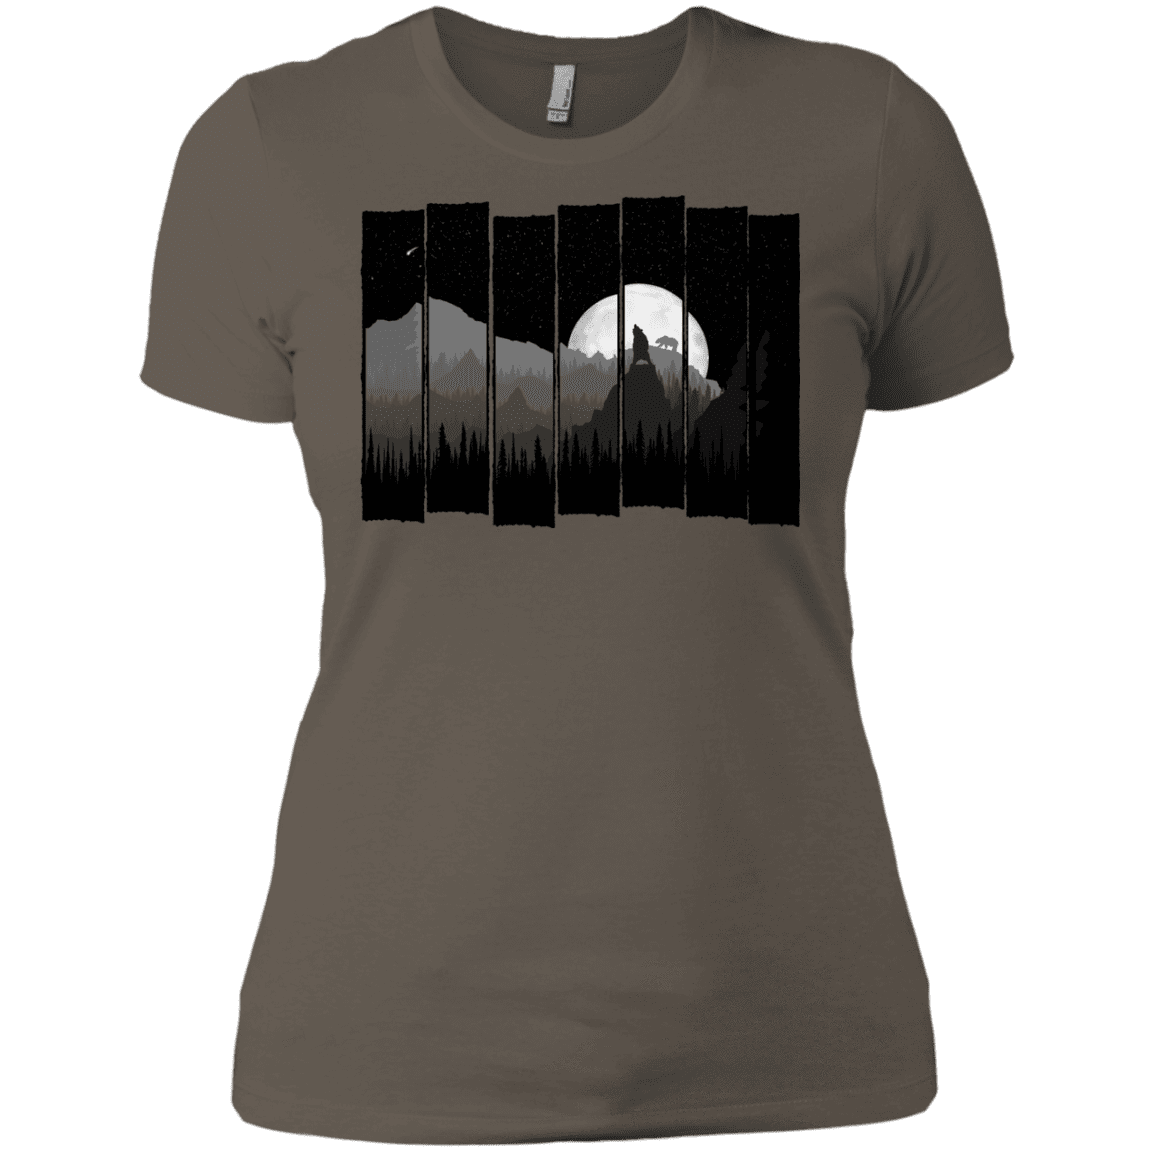 T-Shirts Warm Grey / X-Small Bear Slats Women's Premium T-Shirt